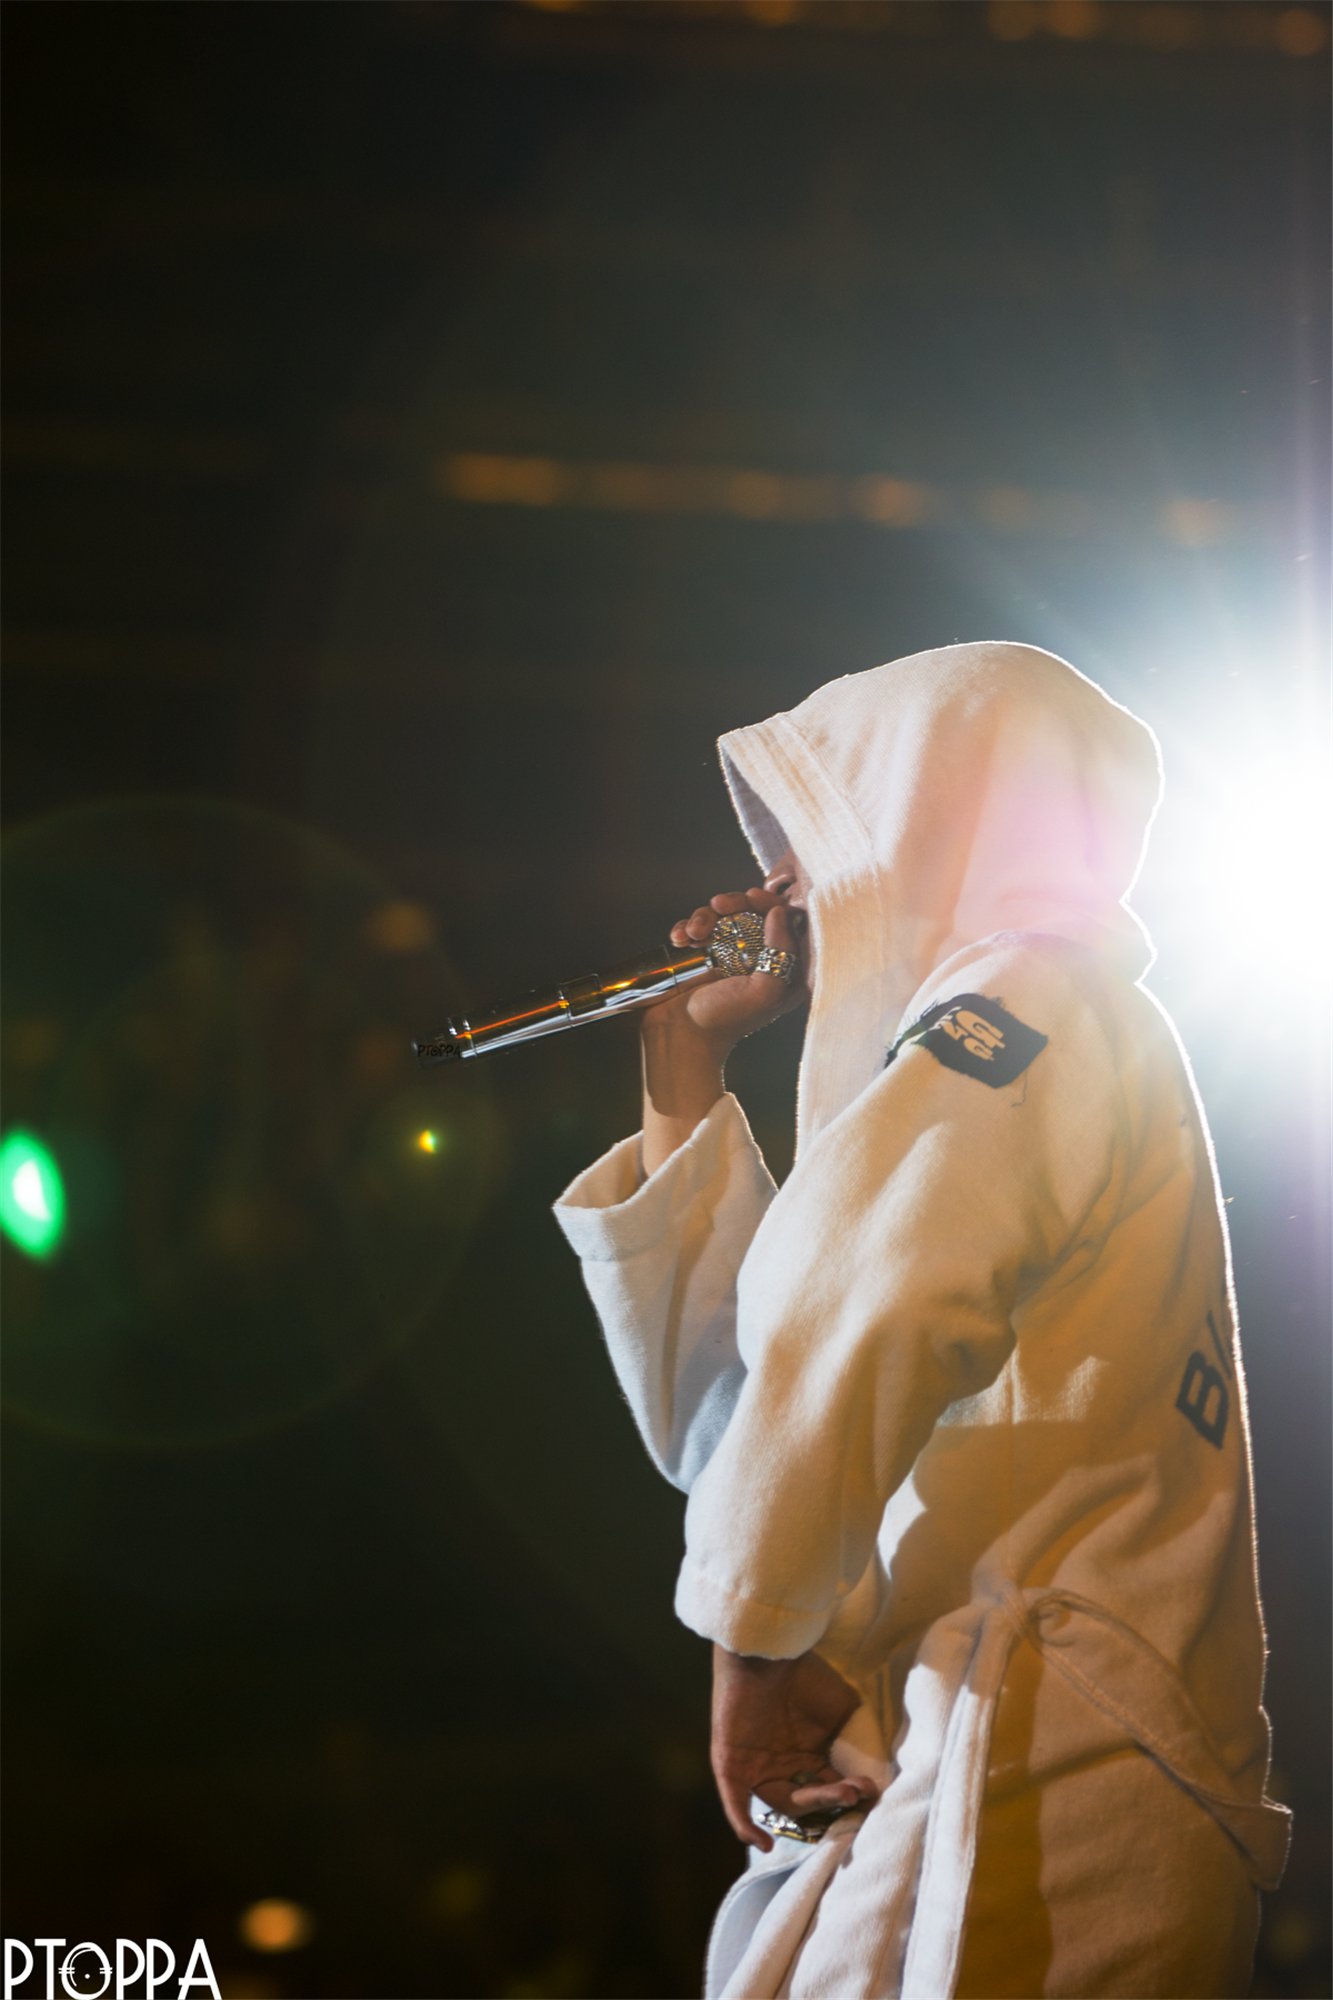 BIGBANG - Made Tour 2015 - Singapore - 18jul2015 - PT.OPPA - 19 (Custom) (2).jpg